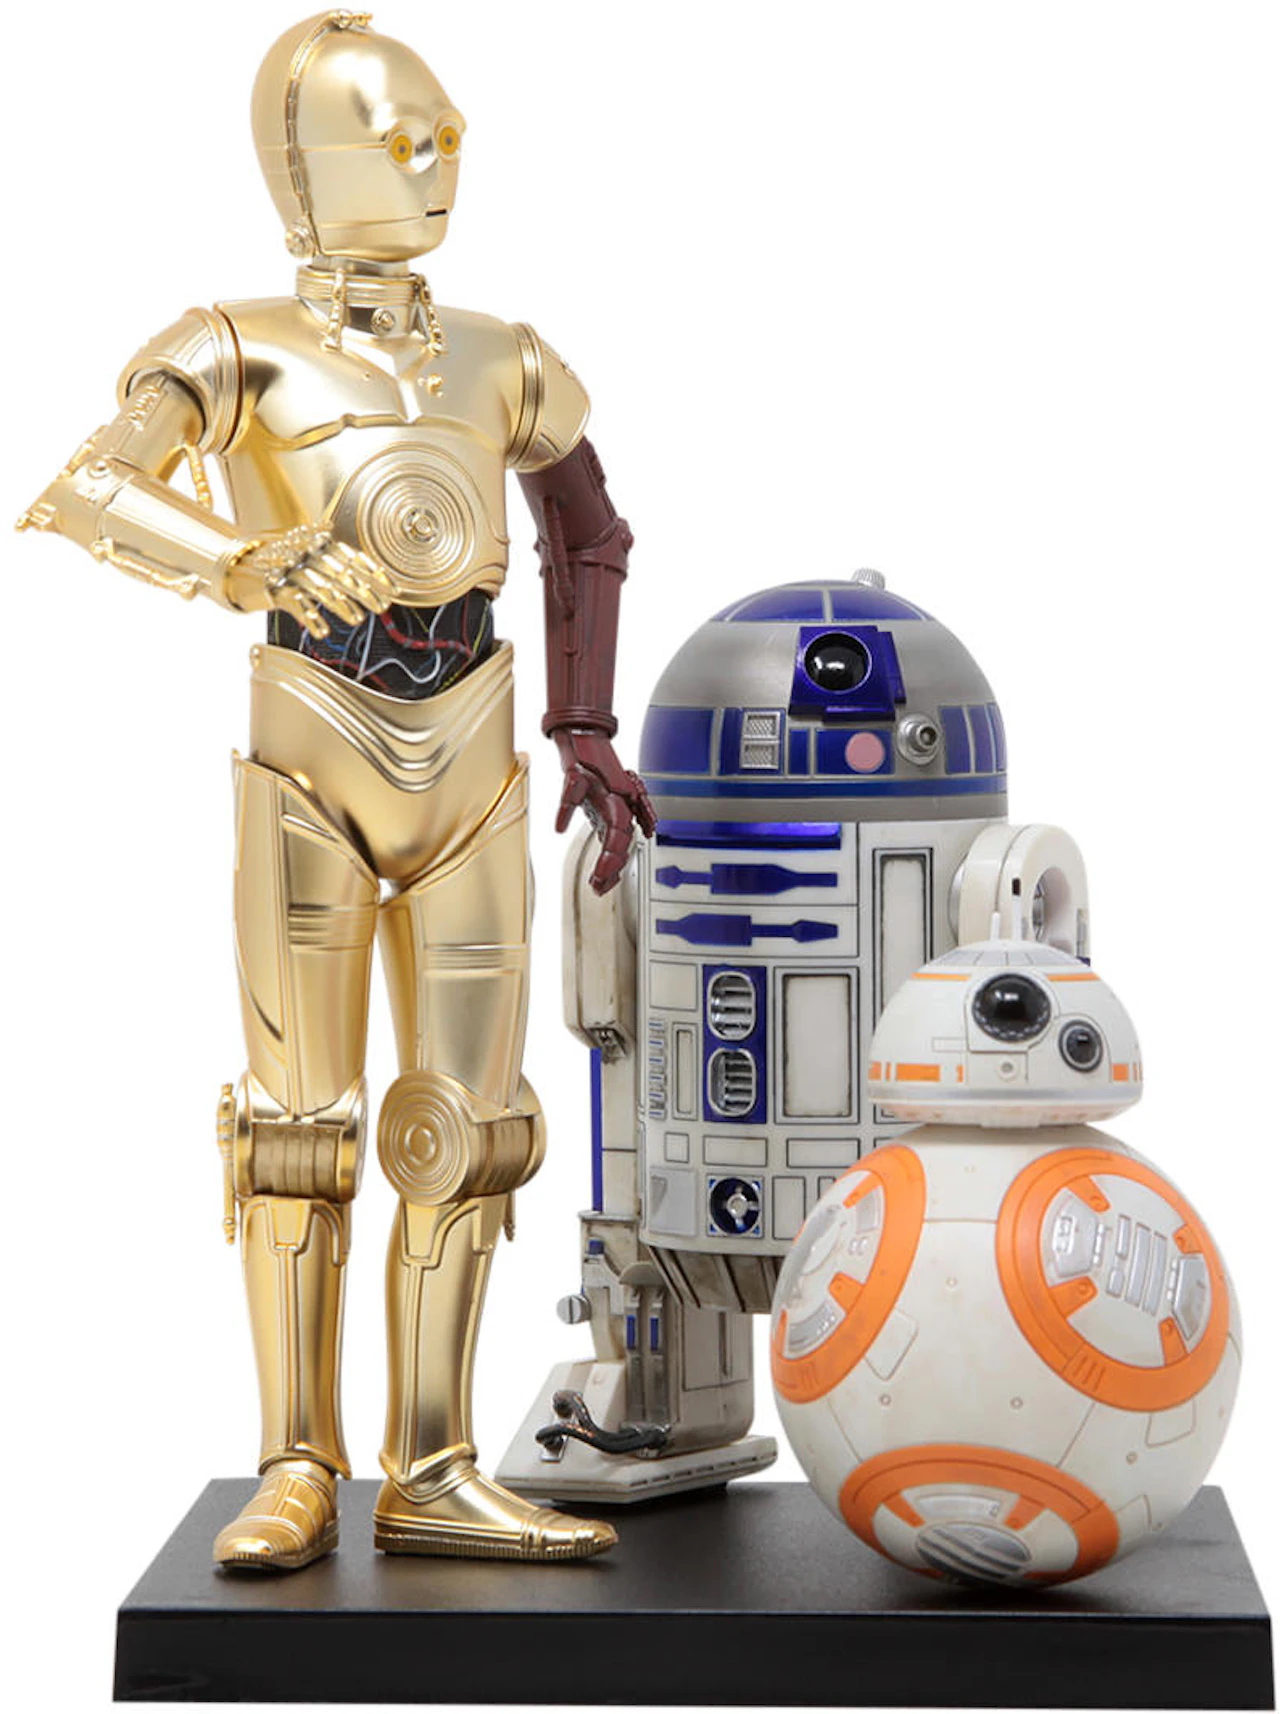 Trágico carolino apagado Kotobukiya ARTFX+ Star Wars The Force Awakens R2-D2 And C-3PO With BB-8  Figure Gold & White - ES